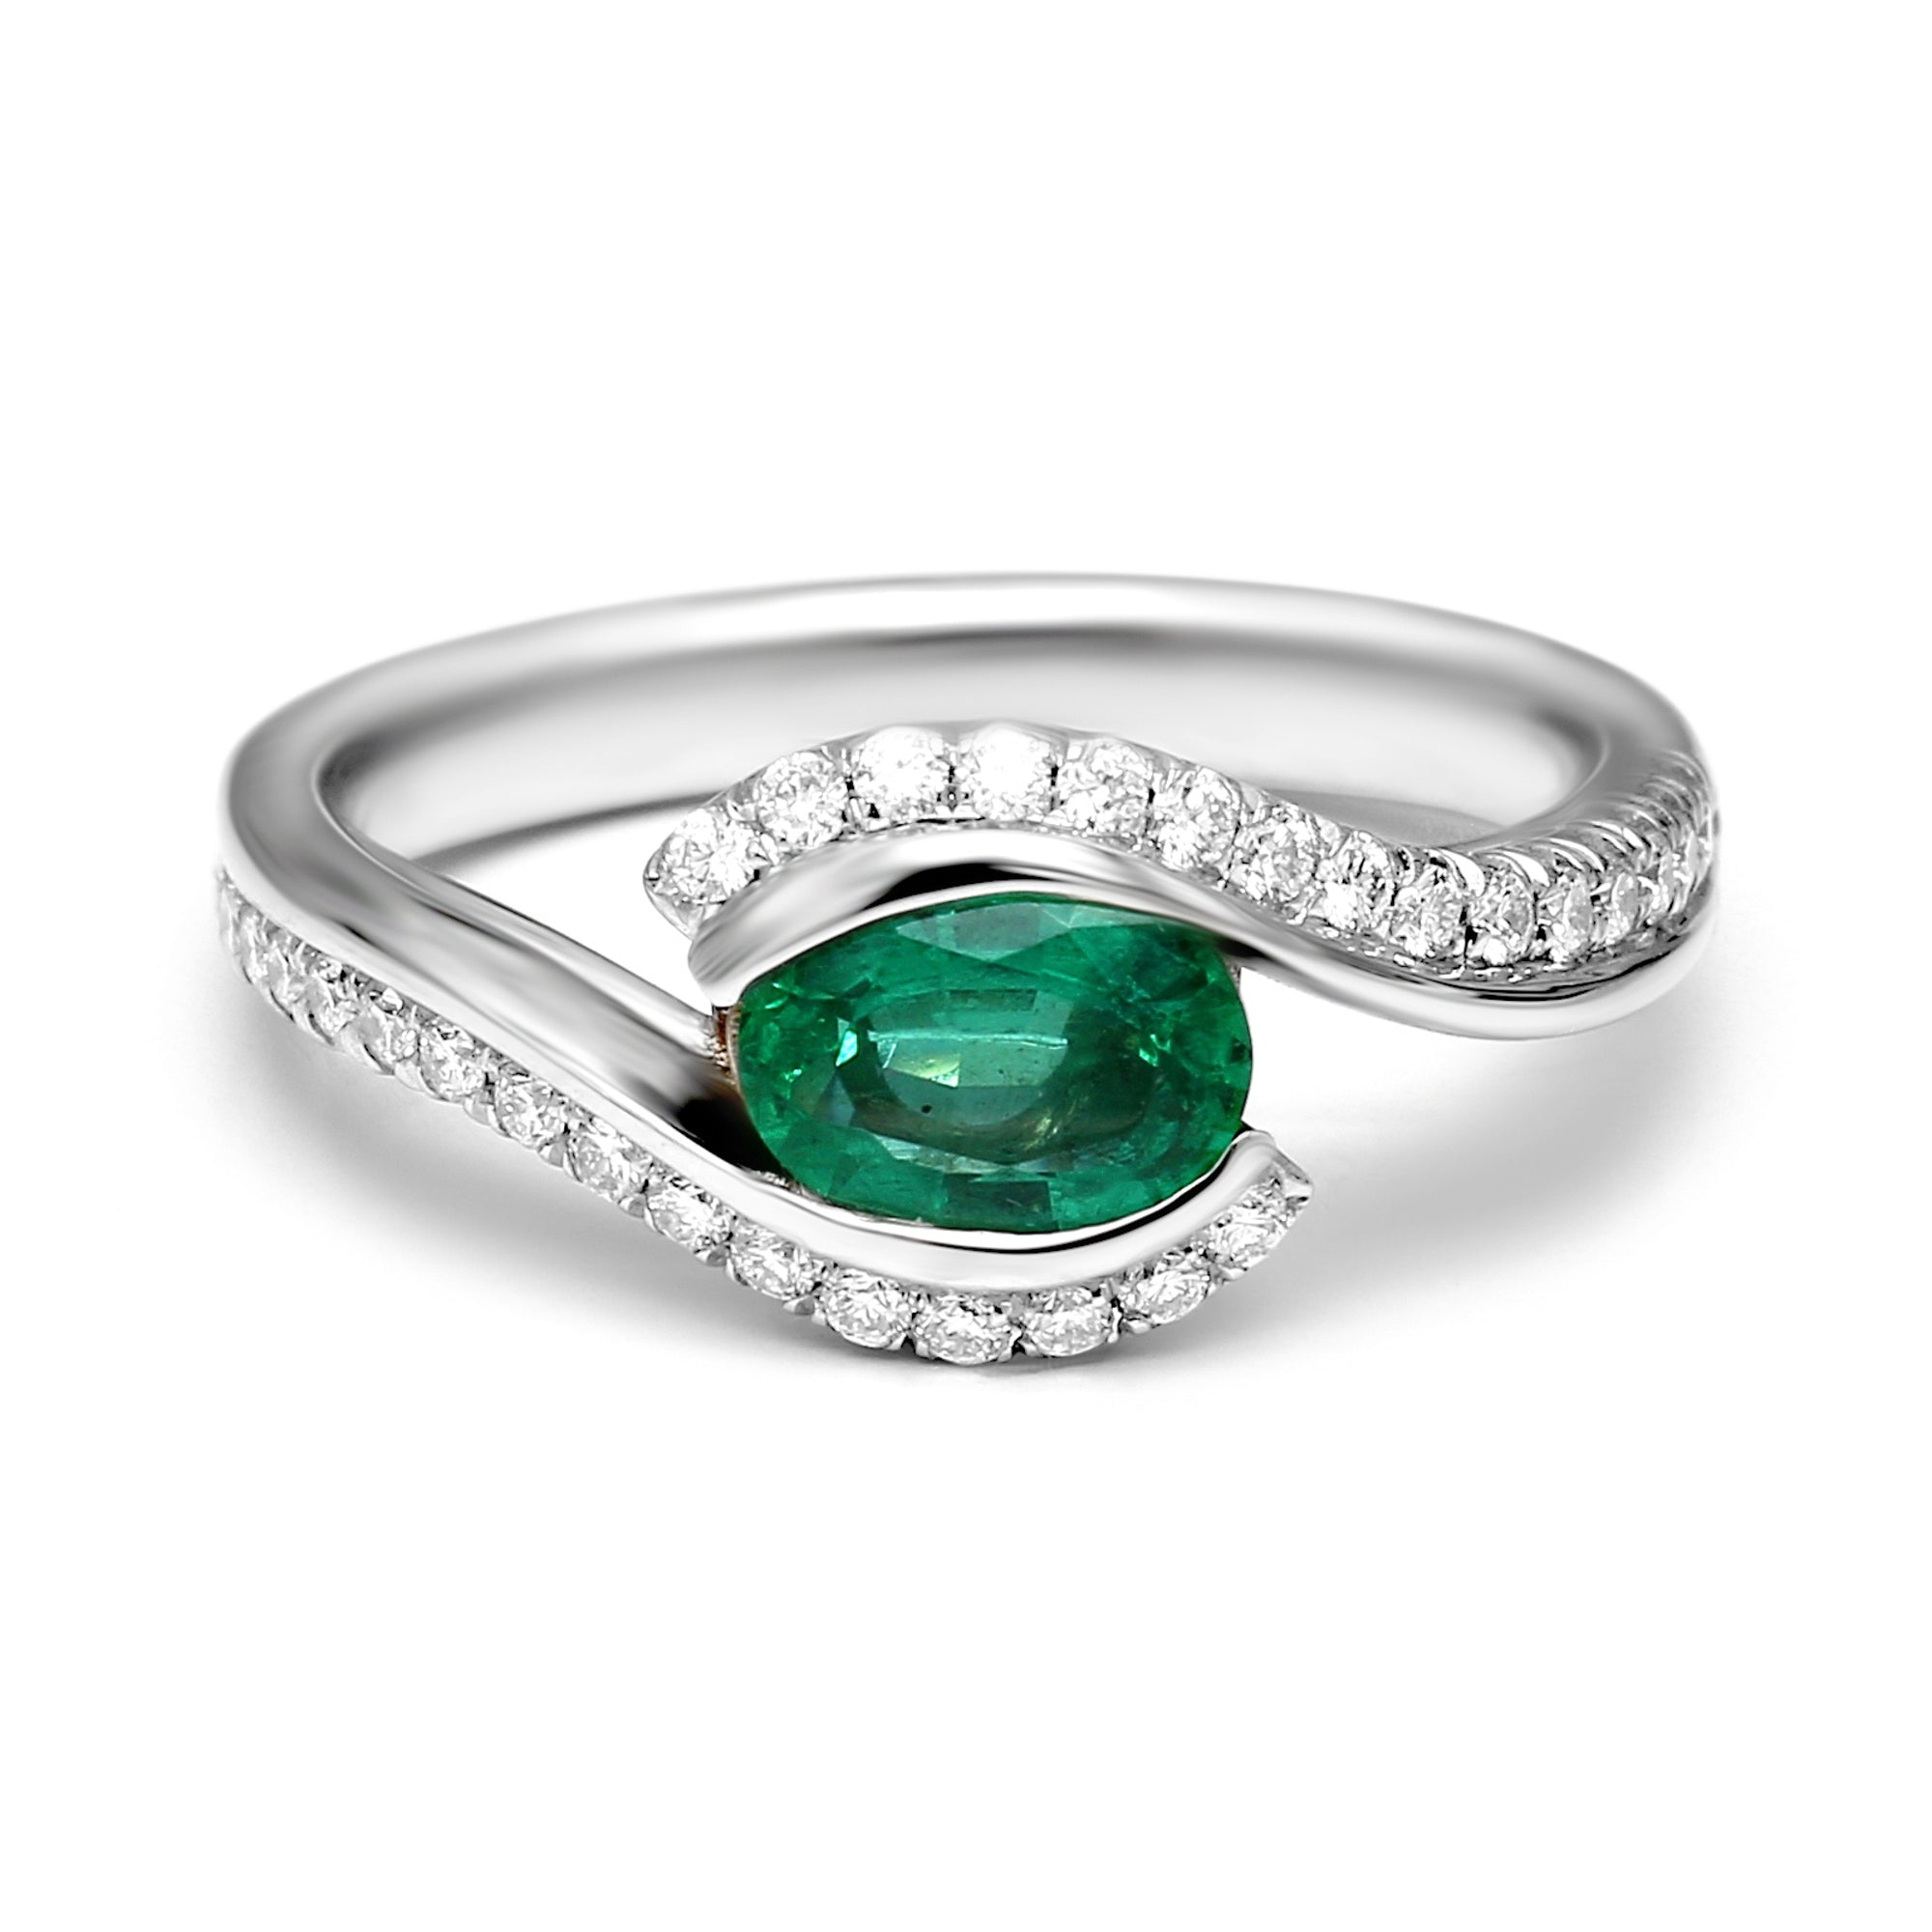 Emerald Oval "Eye" Ring - 1.03ct TW